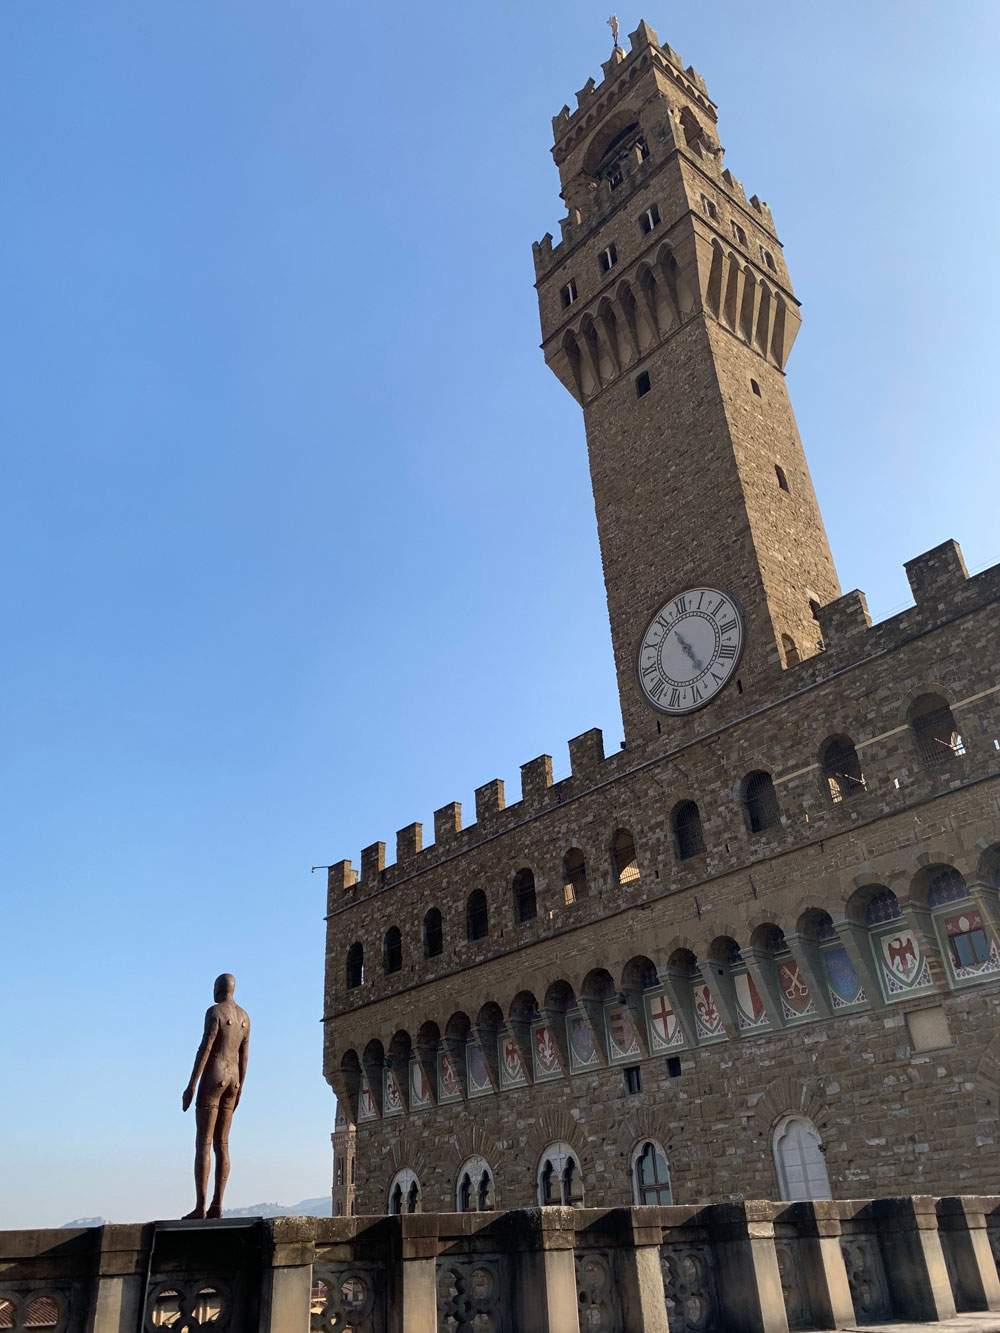 A man standing on the Uffizi terrace: it's Gormley's Event Horizon